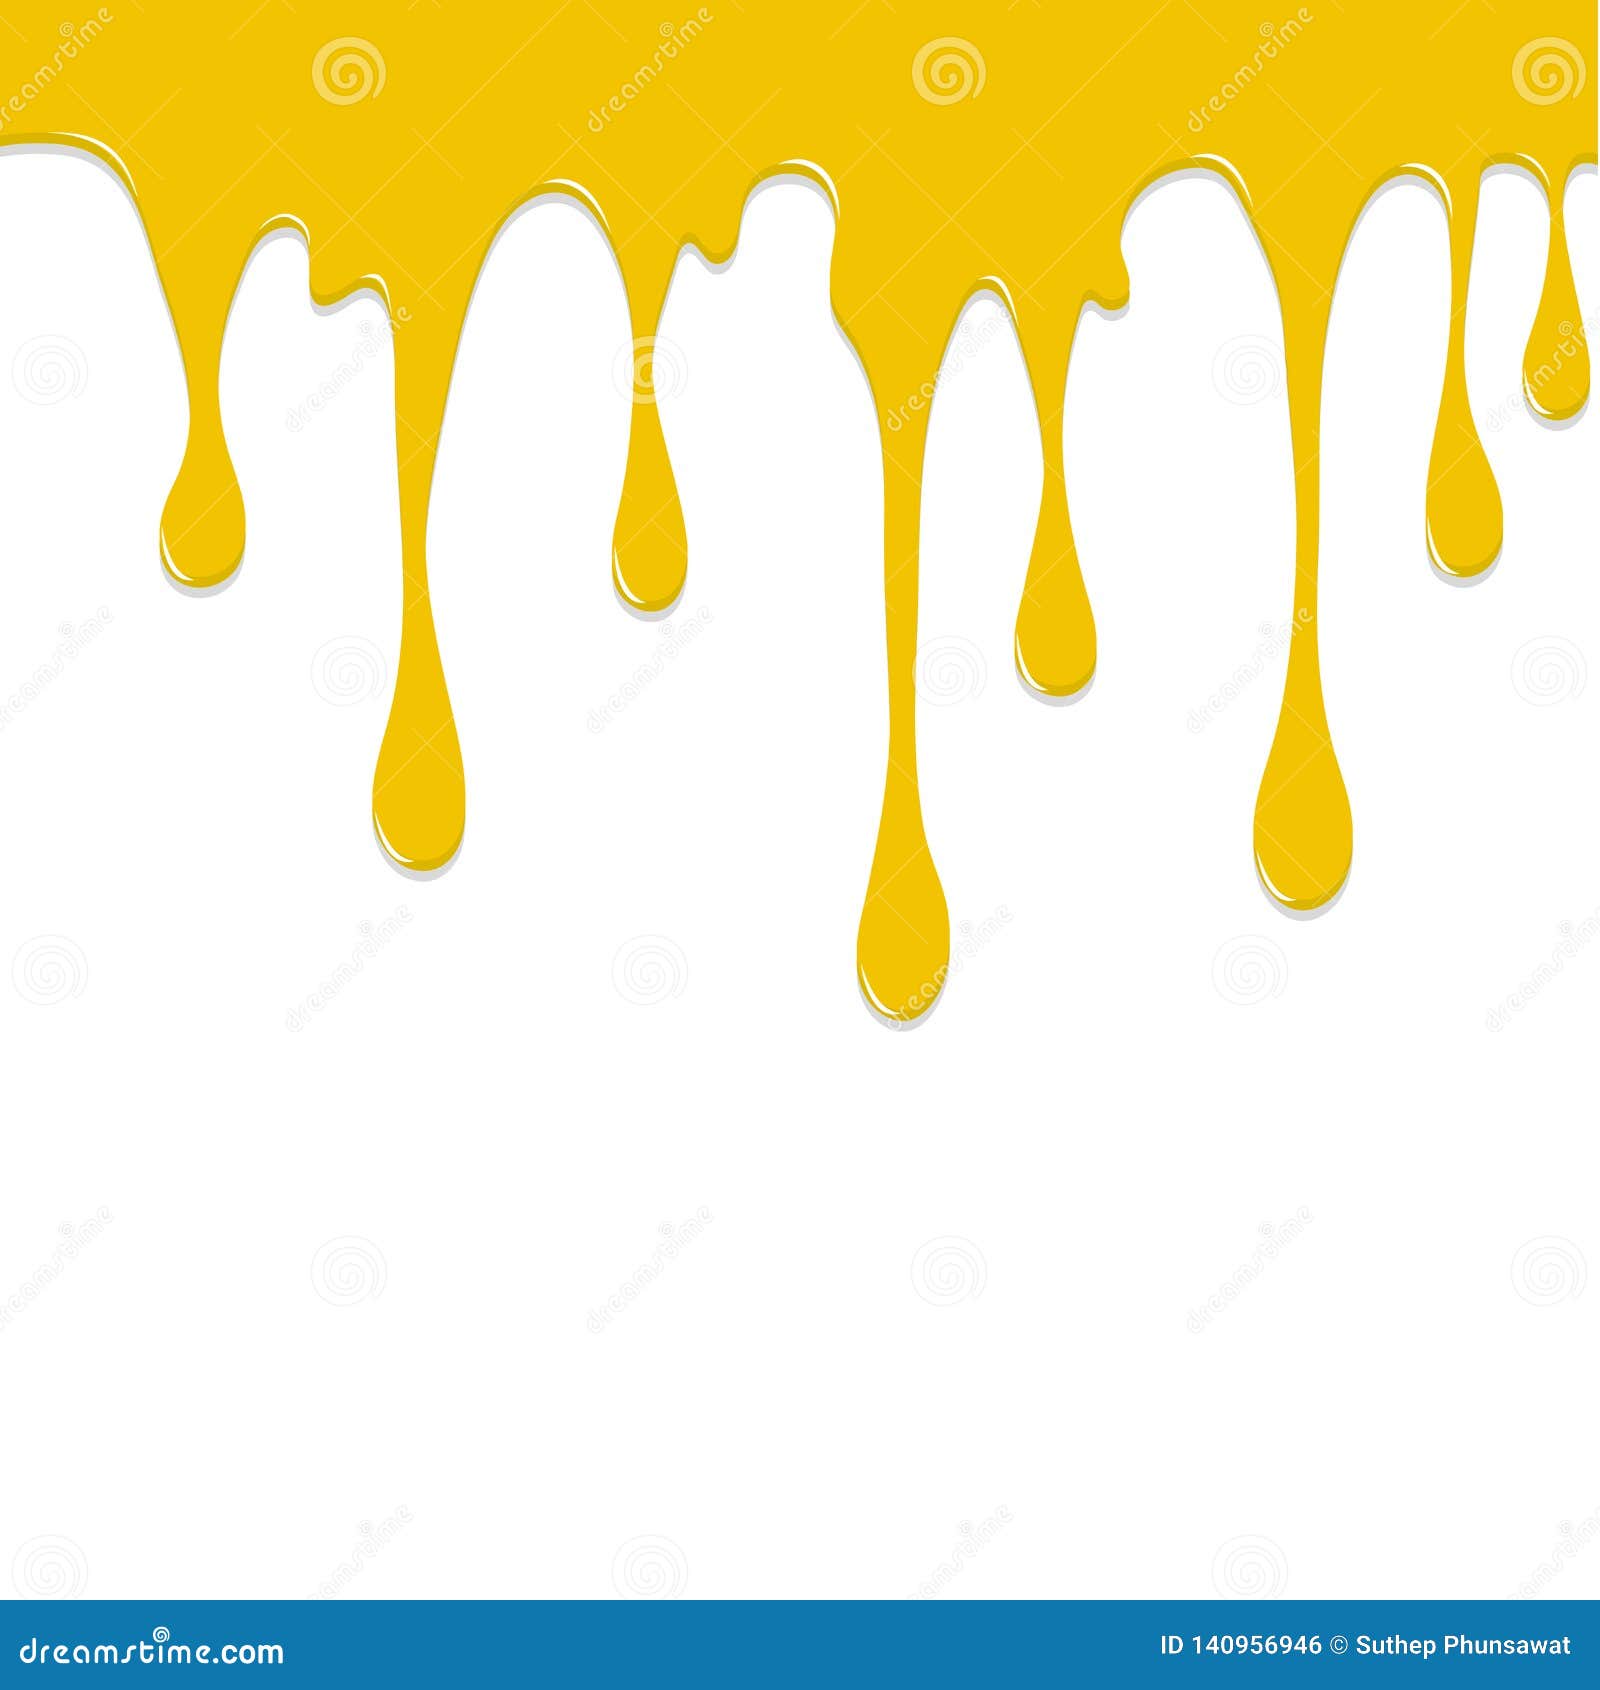 Yellow Paint splat Stock Illustration by ©ginosphotos1 #13992505